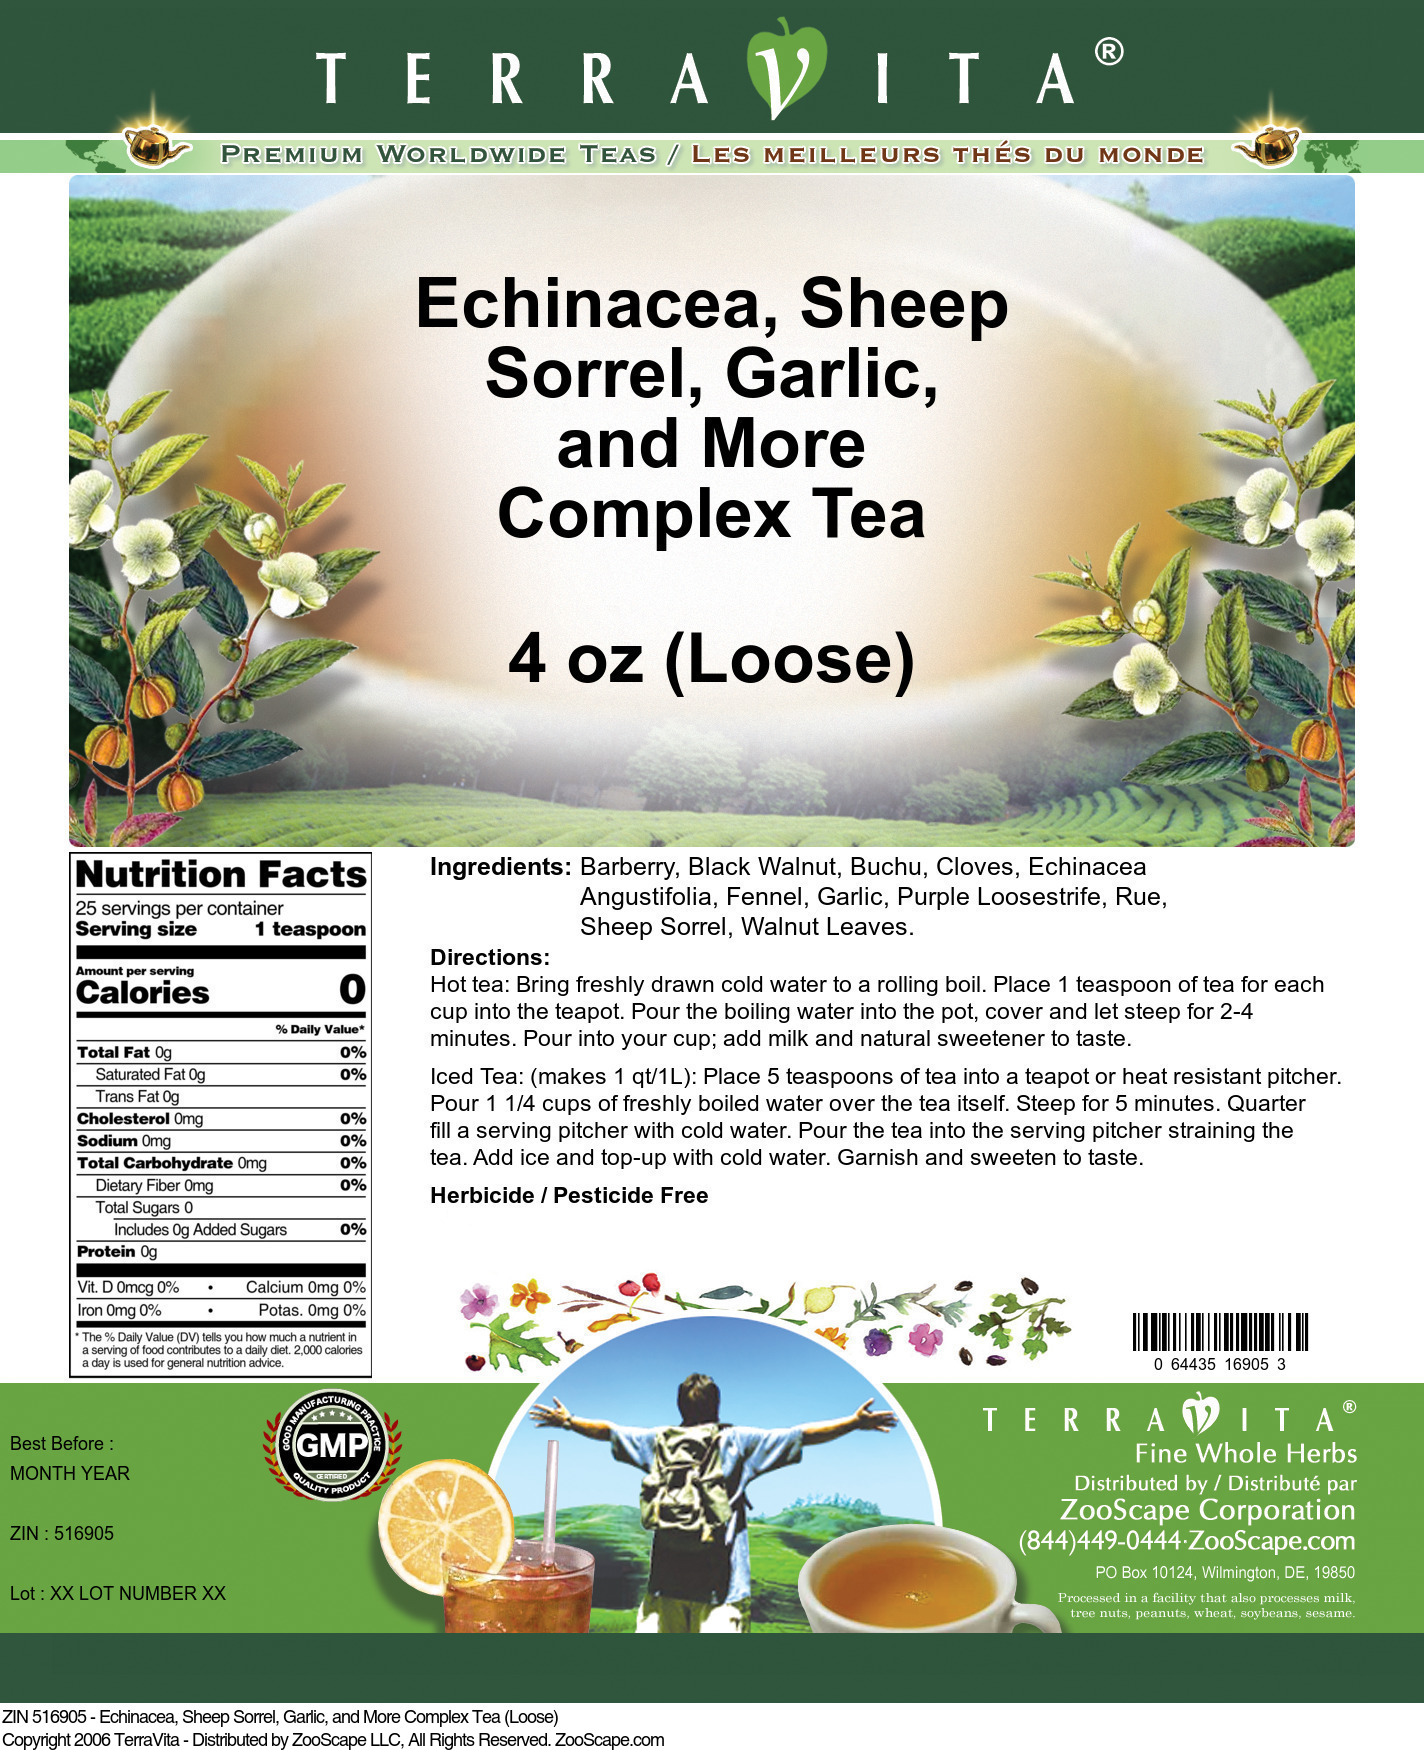 Echinacea, Sheep Sorrel, Garlic, and More Complex Tea (Loose) - Label